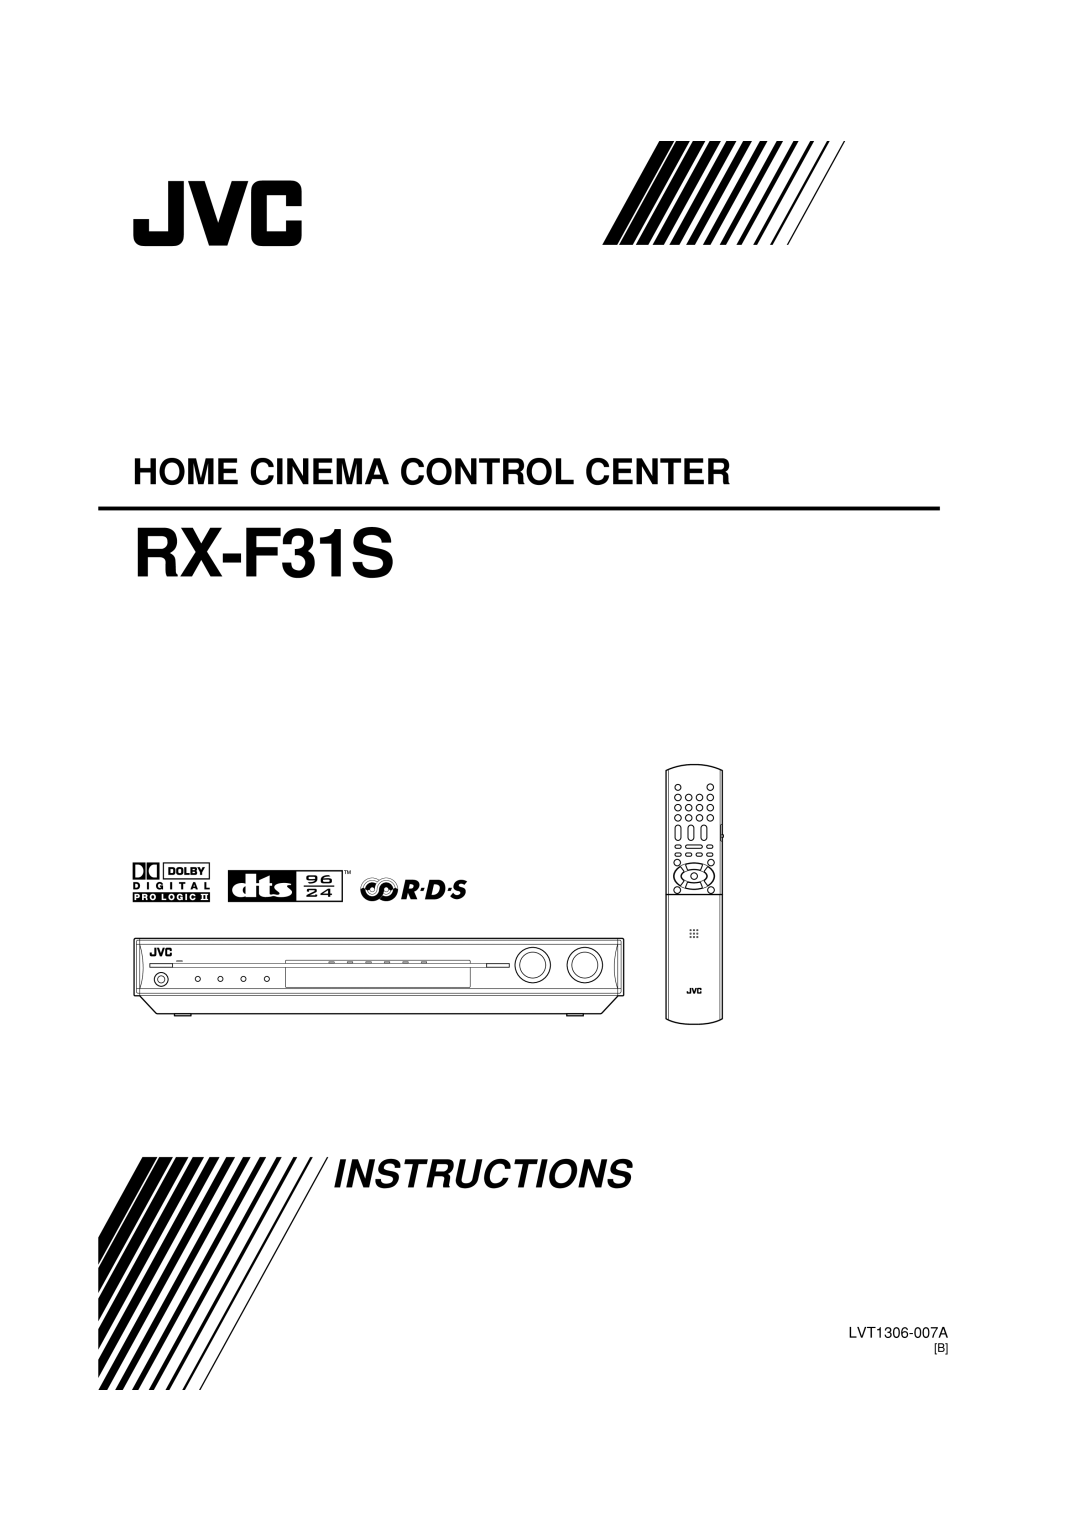 JVC LVT1306-007A manual RX-F31S, Instructions, Home Cinema Control Center 